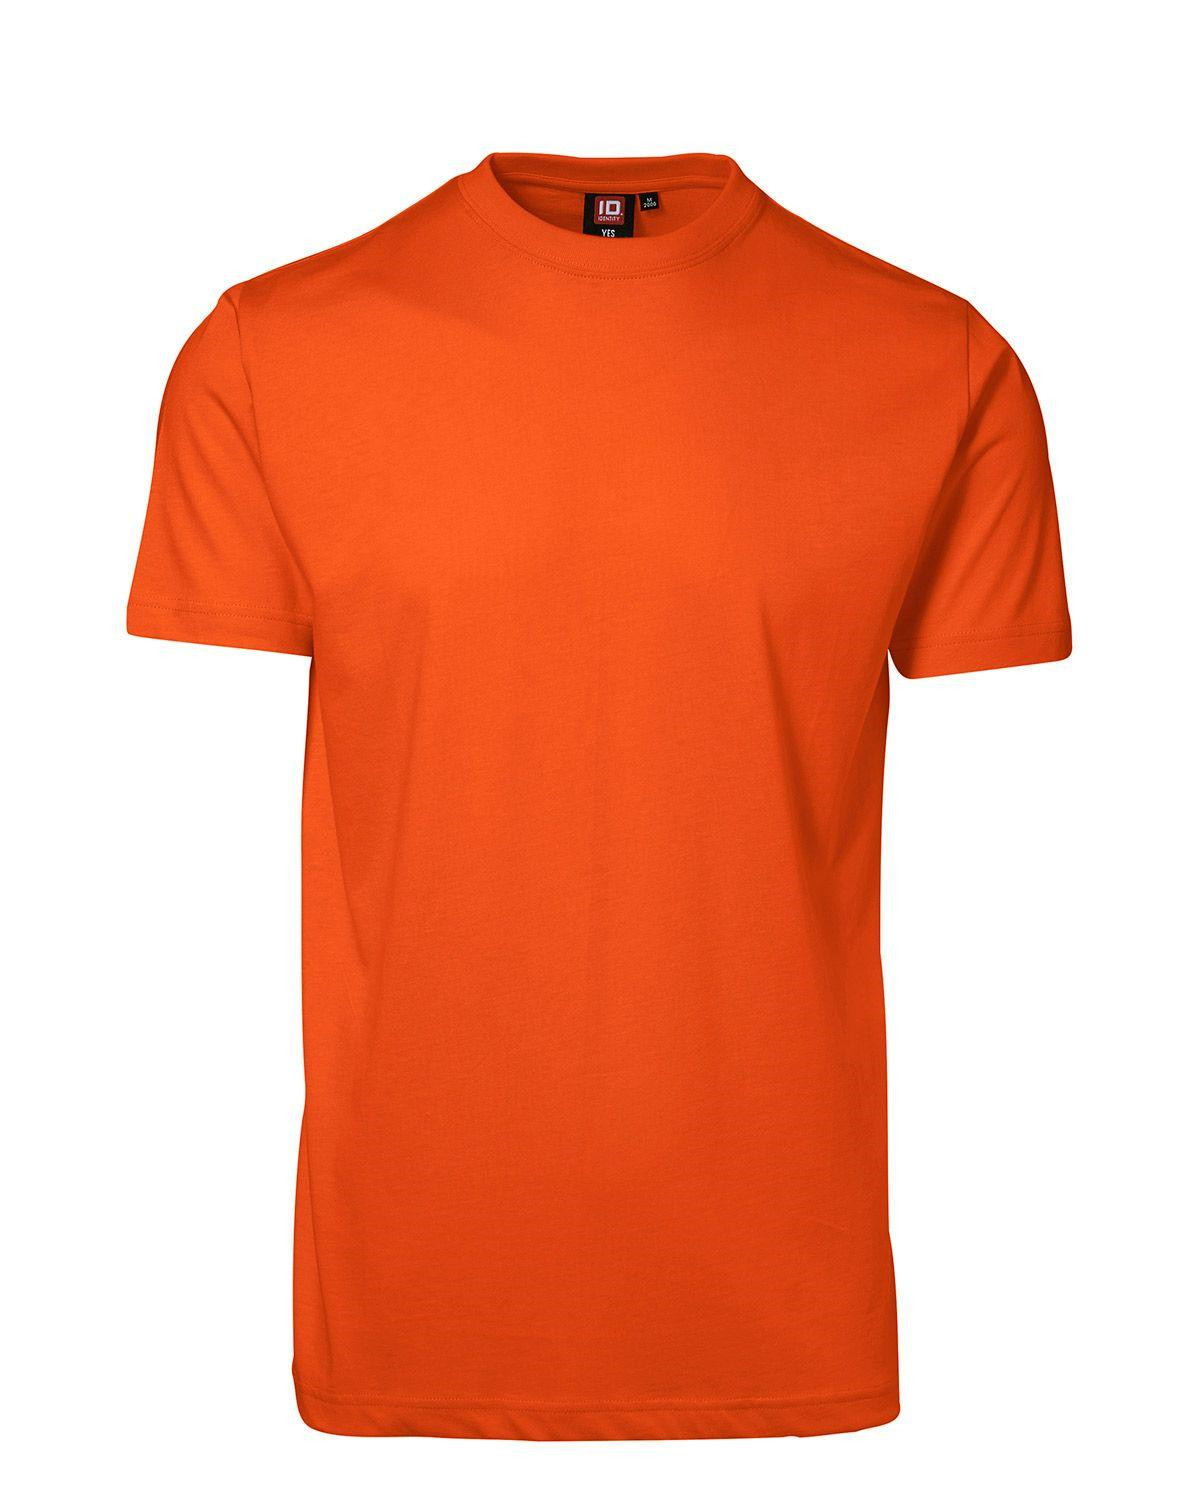 ID YES T-shirt (Orange, 2XL)